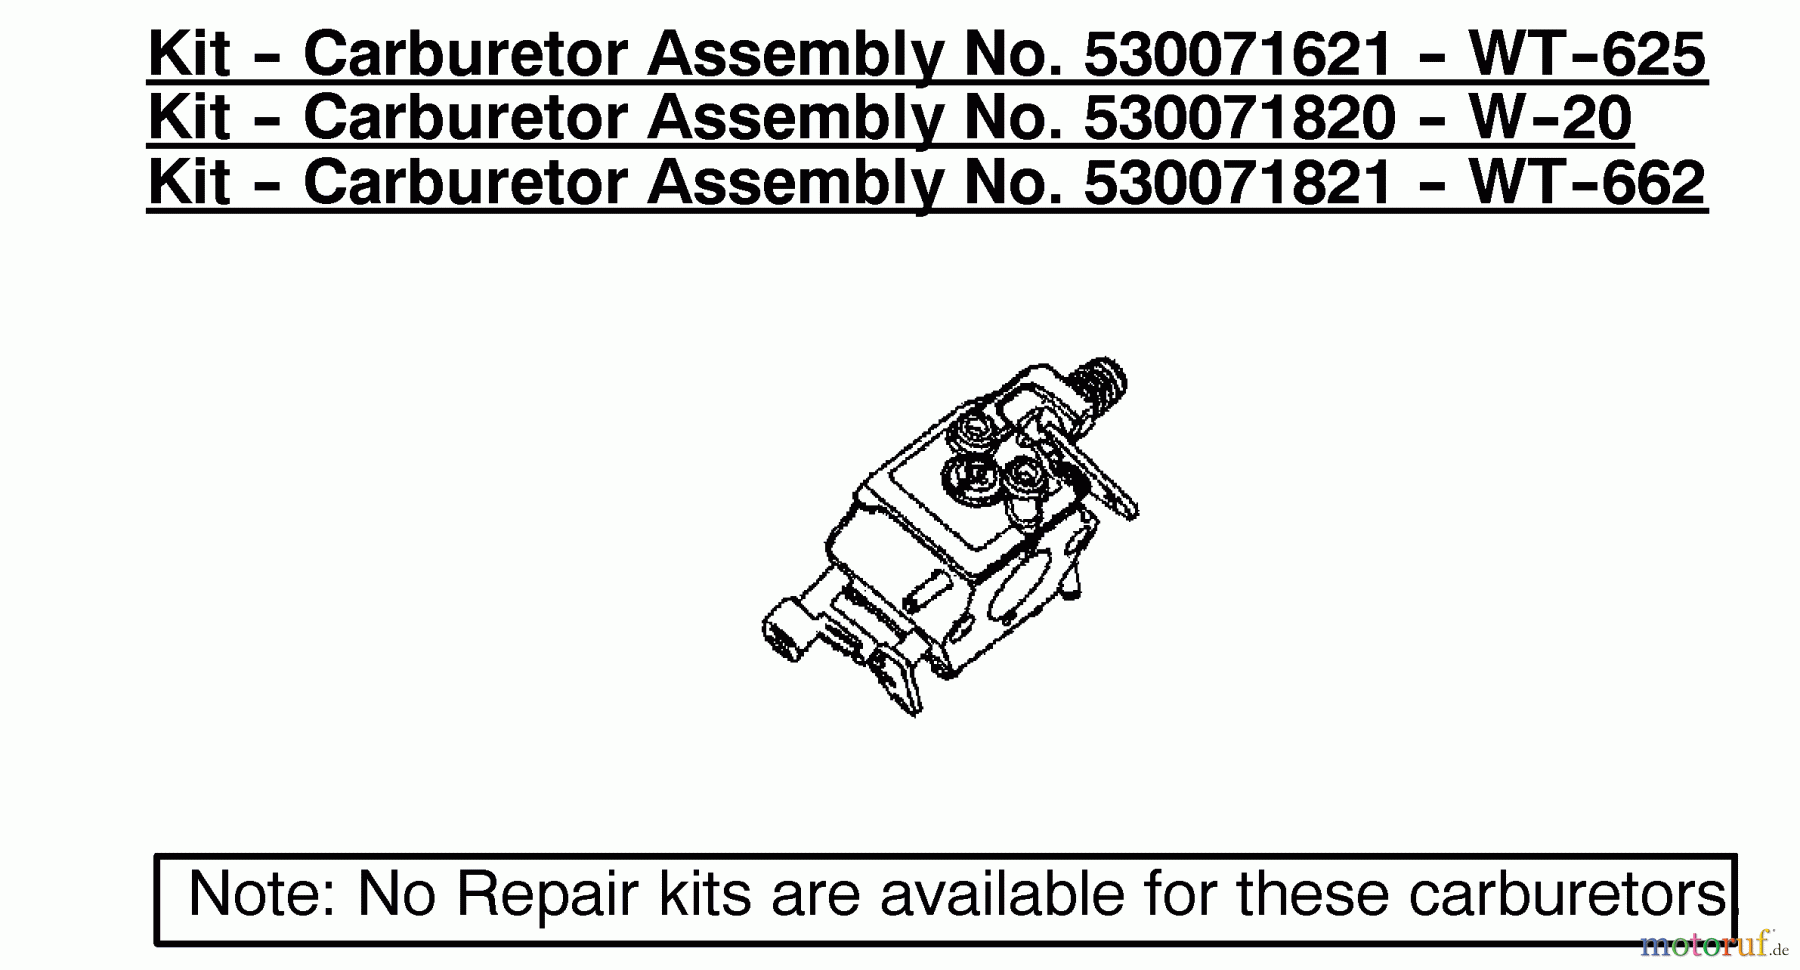  Poulan / Weed Eater Motorsägen 2450 (Type 4) - Poulan Woodmaster Chainsaw Kit - Carburetor Assembly 530071621/530071820/530071821